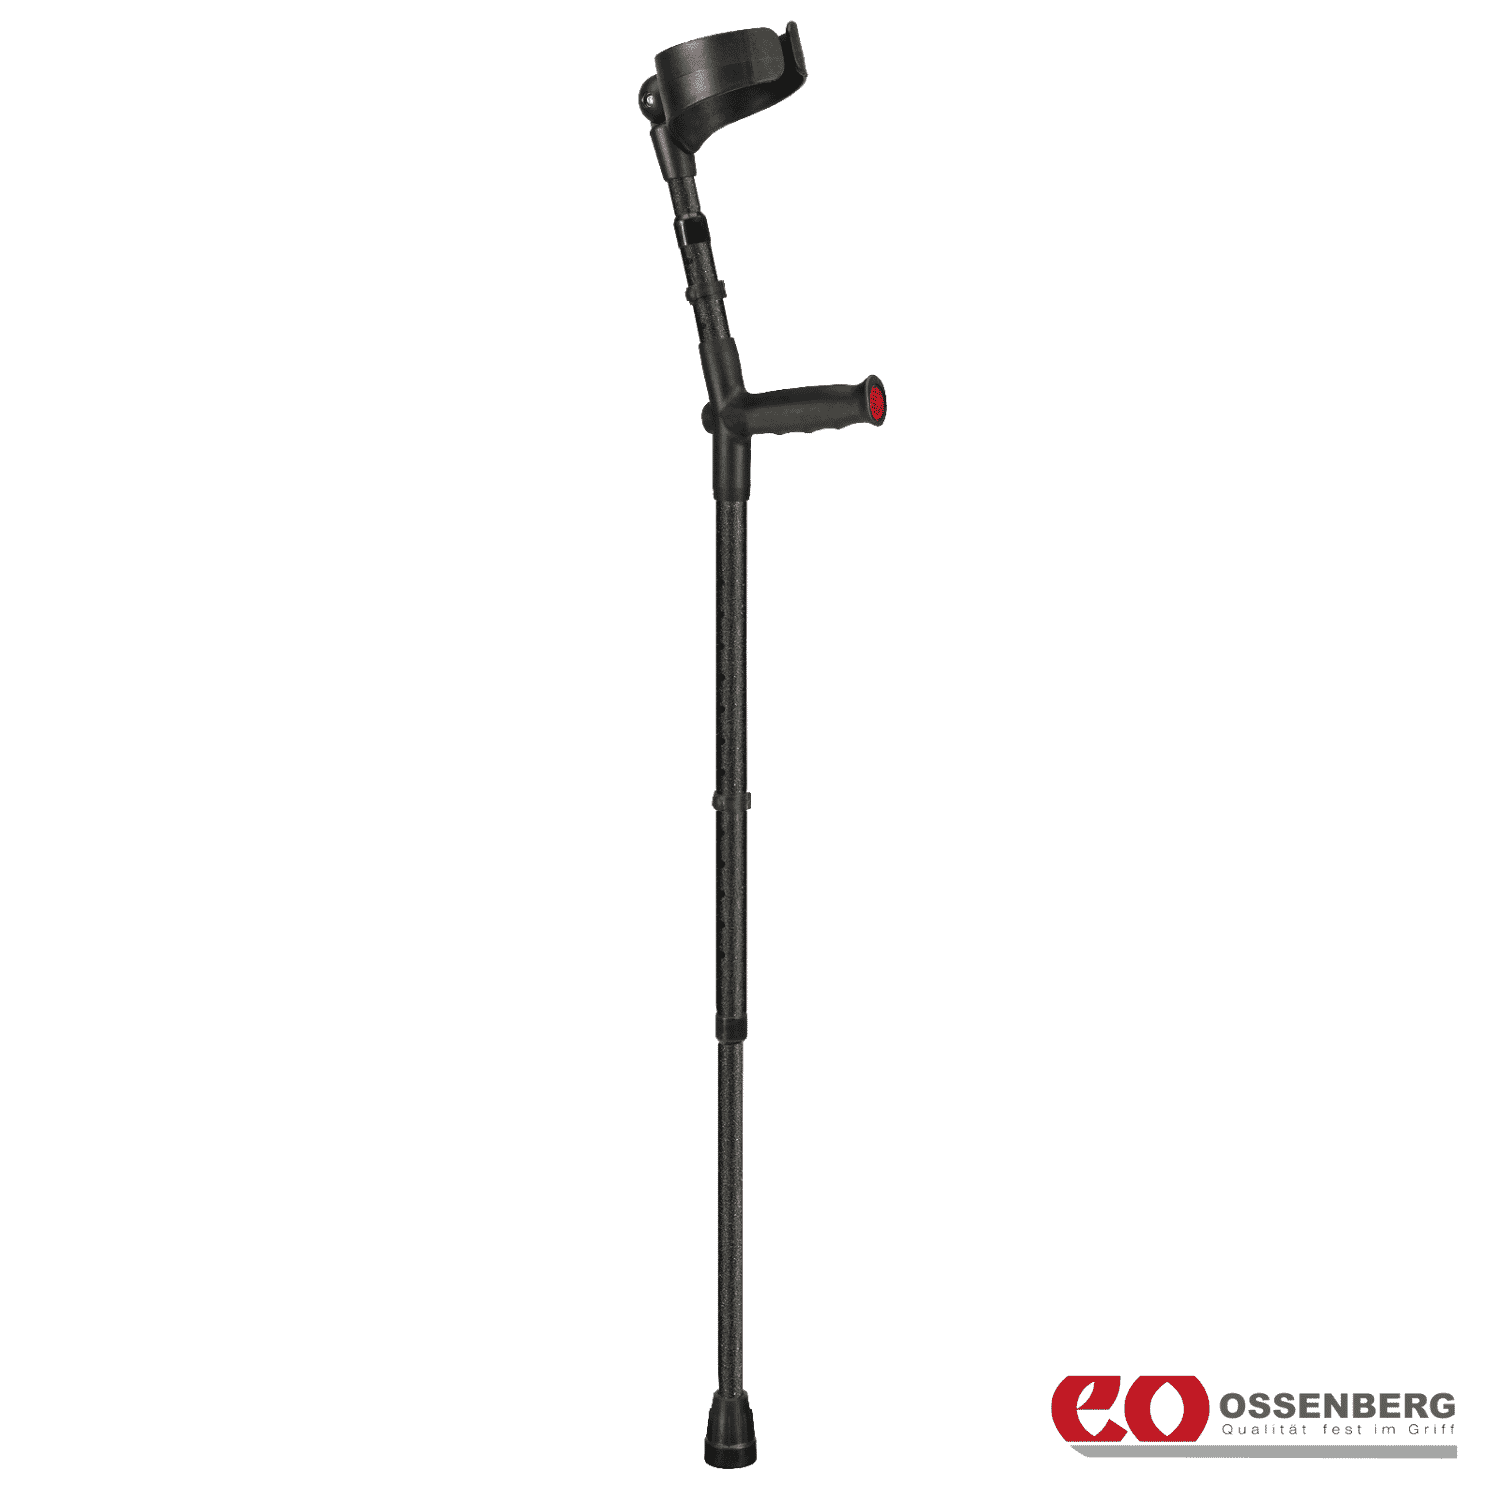 View Ossenberg Soft Grip Double Adjustable Crutches Black Single information